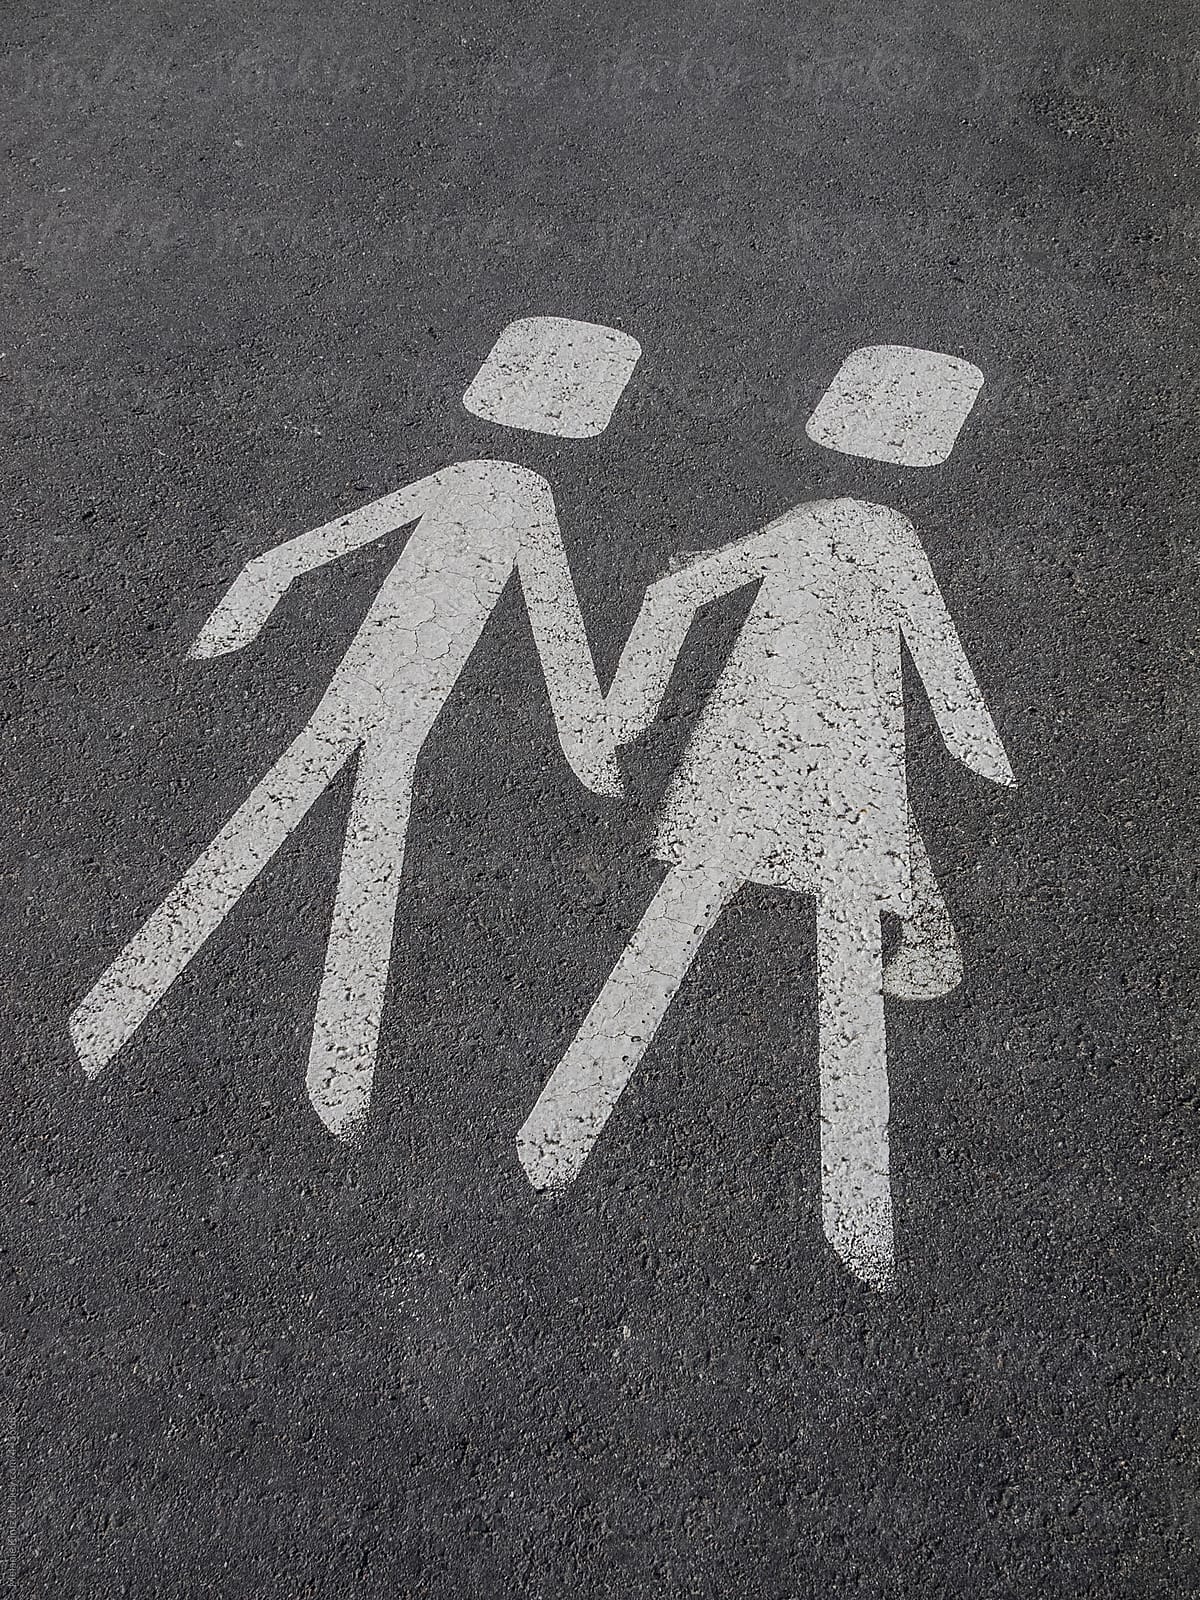 pedestrian sign on pavement